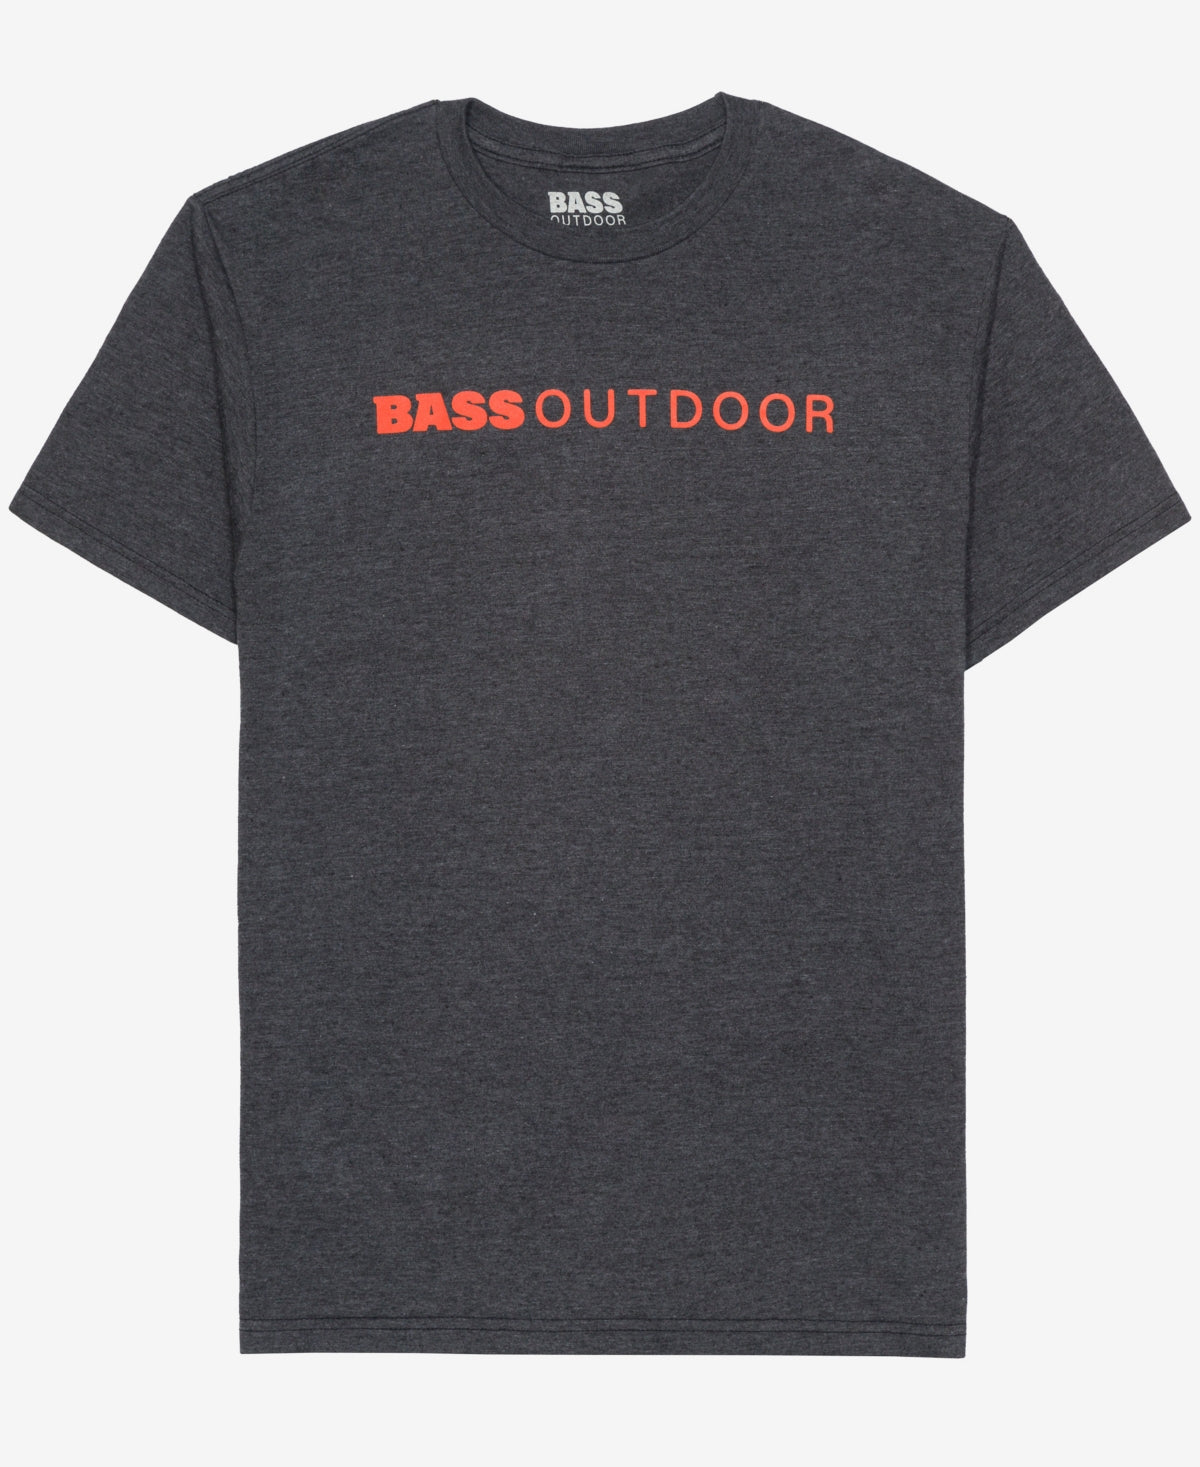 Bass Outdoor Men's Short Sleeve Crewneck T Shirt Grey Charcoal Heather ...